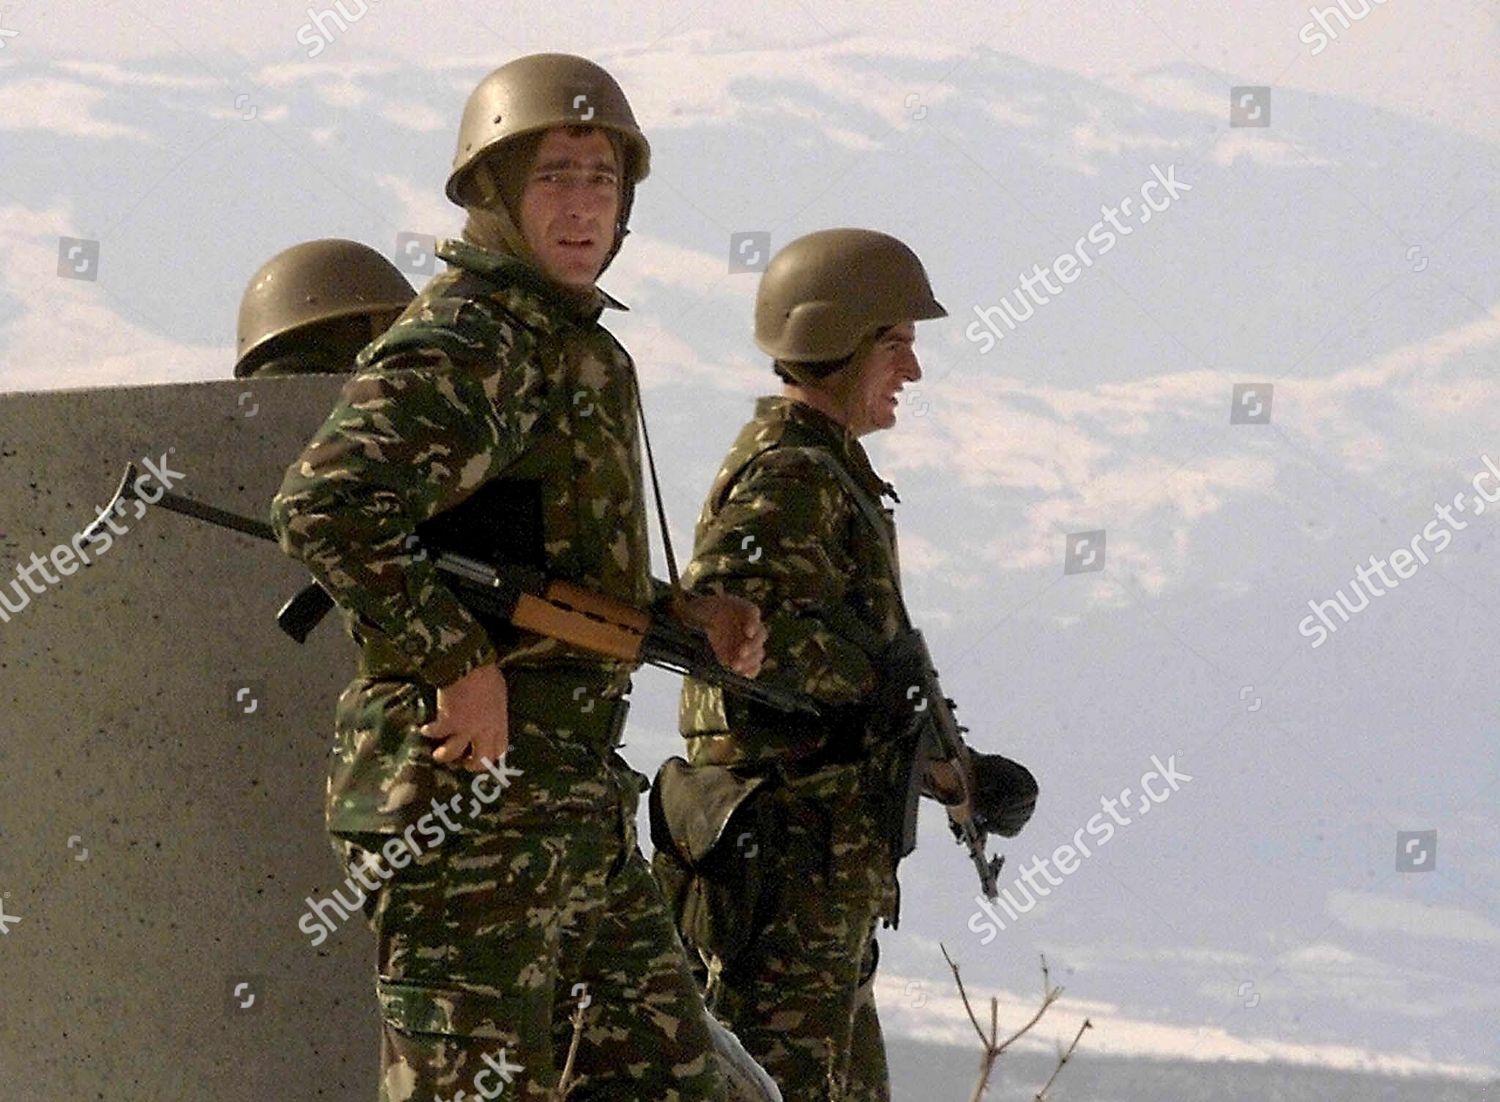 macedonian-kosovo-border-feb-2001-shutterstock-editorial-8482548a.jpg